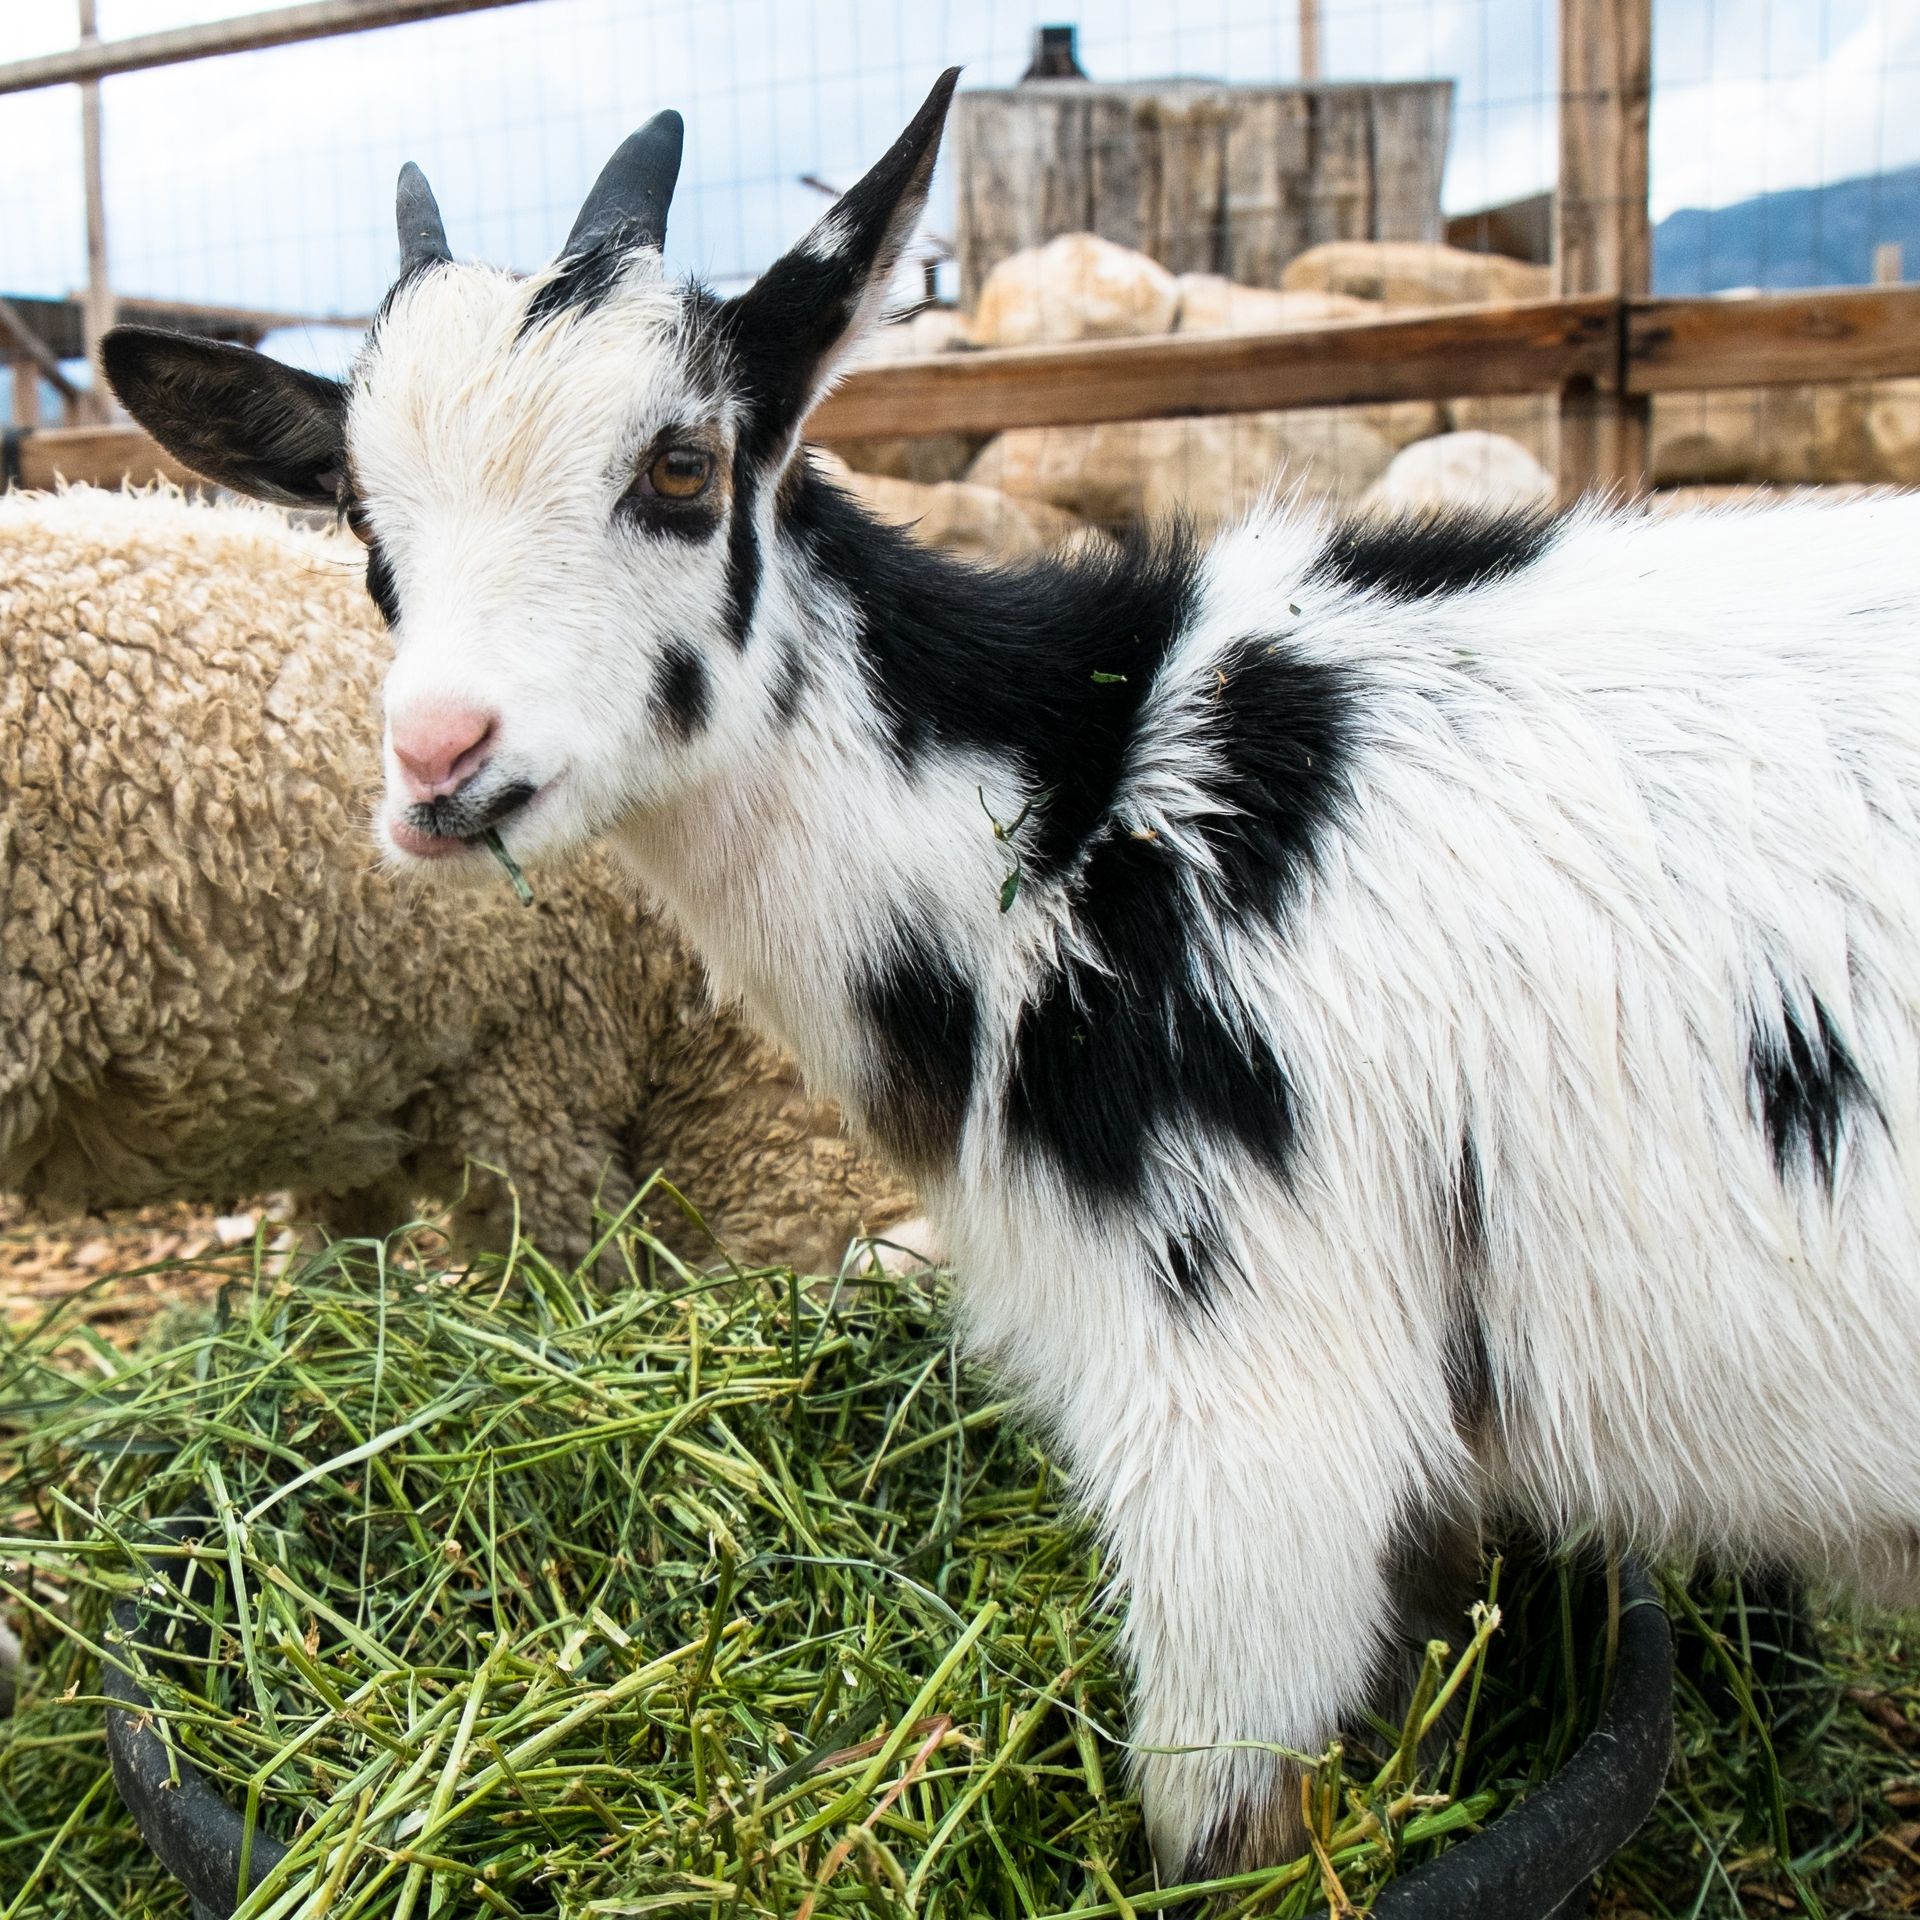 A baby goat on a farm.